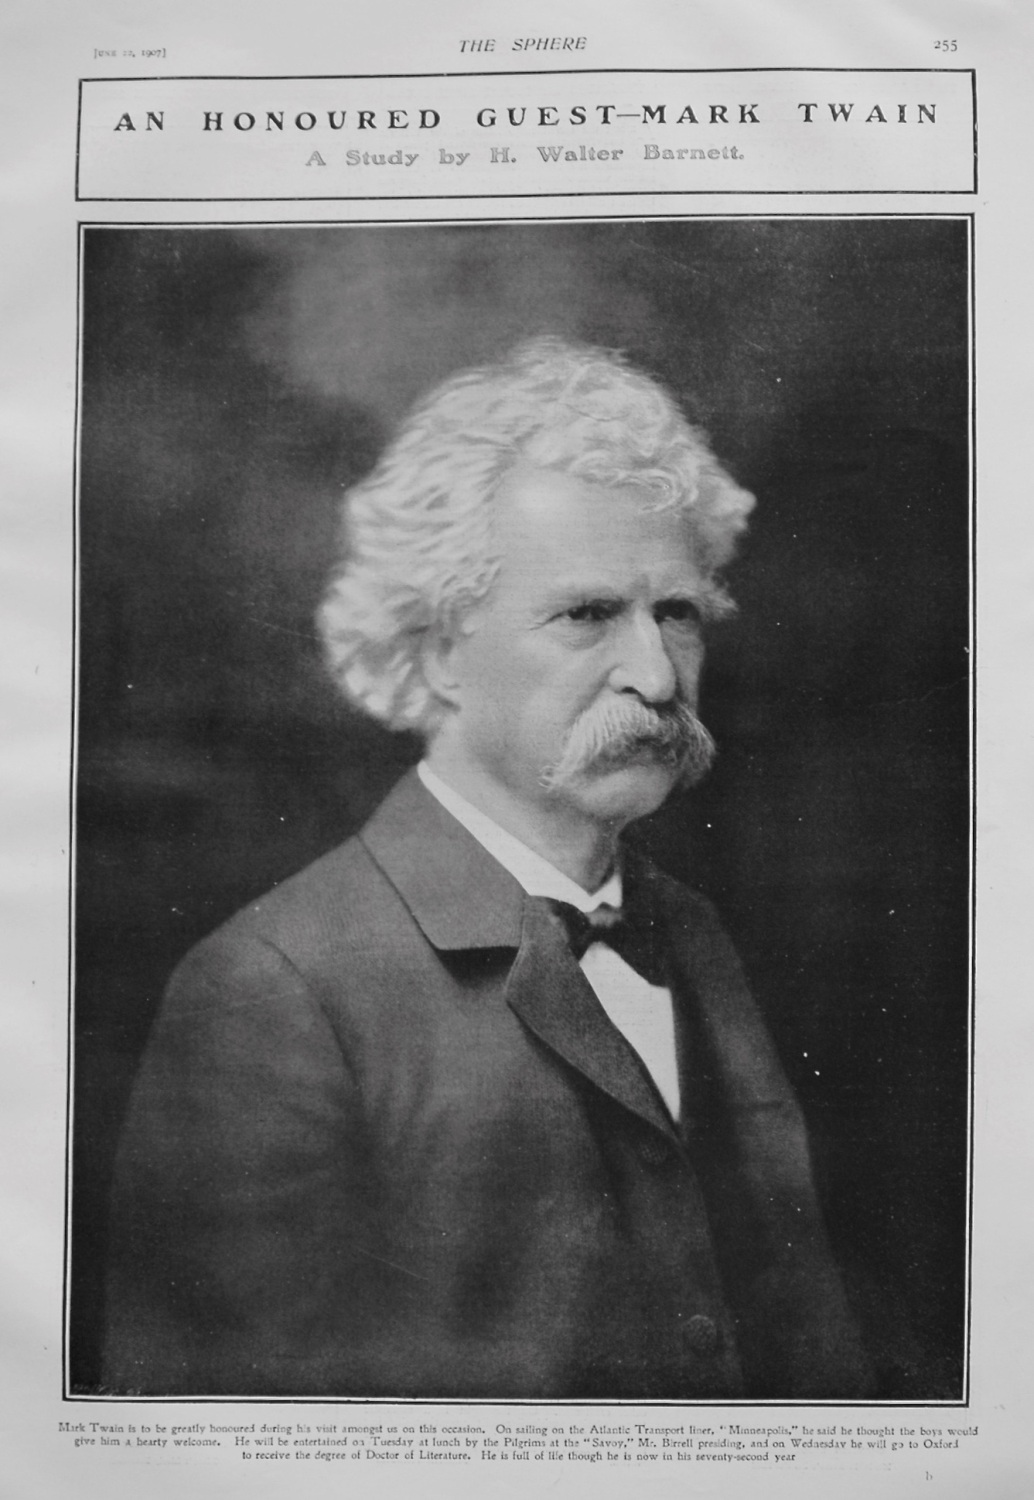 An Honoured Guest- Mark Twain : A Study by H. Walter Barnett. 1907